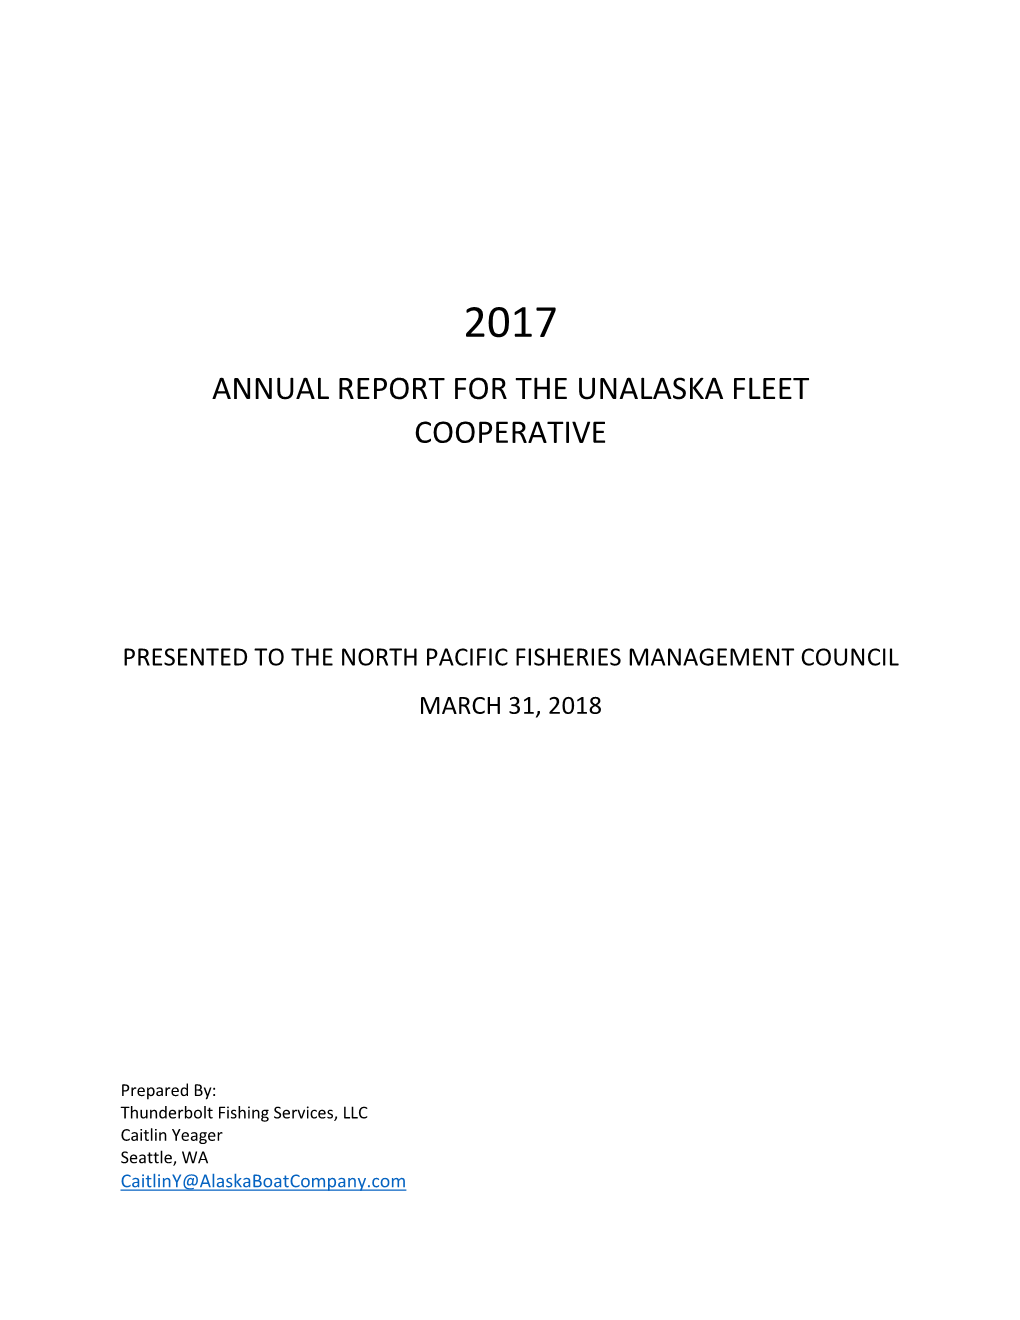 Annual Report for the Unalaska Fleet Cooperative